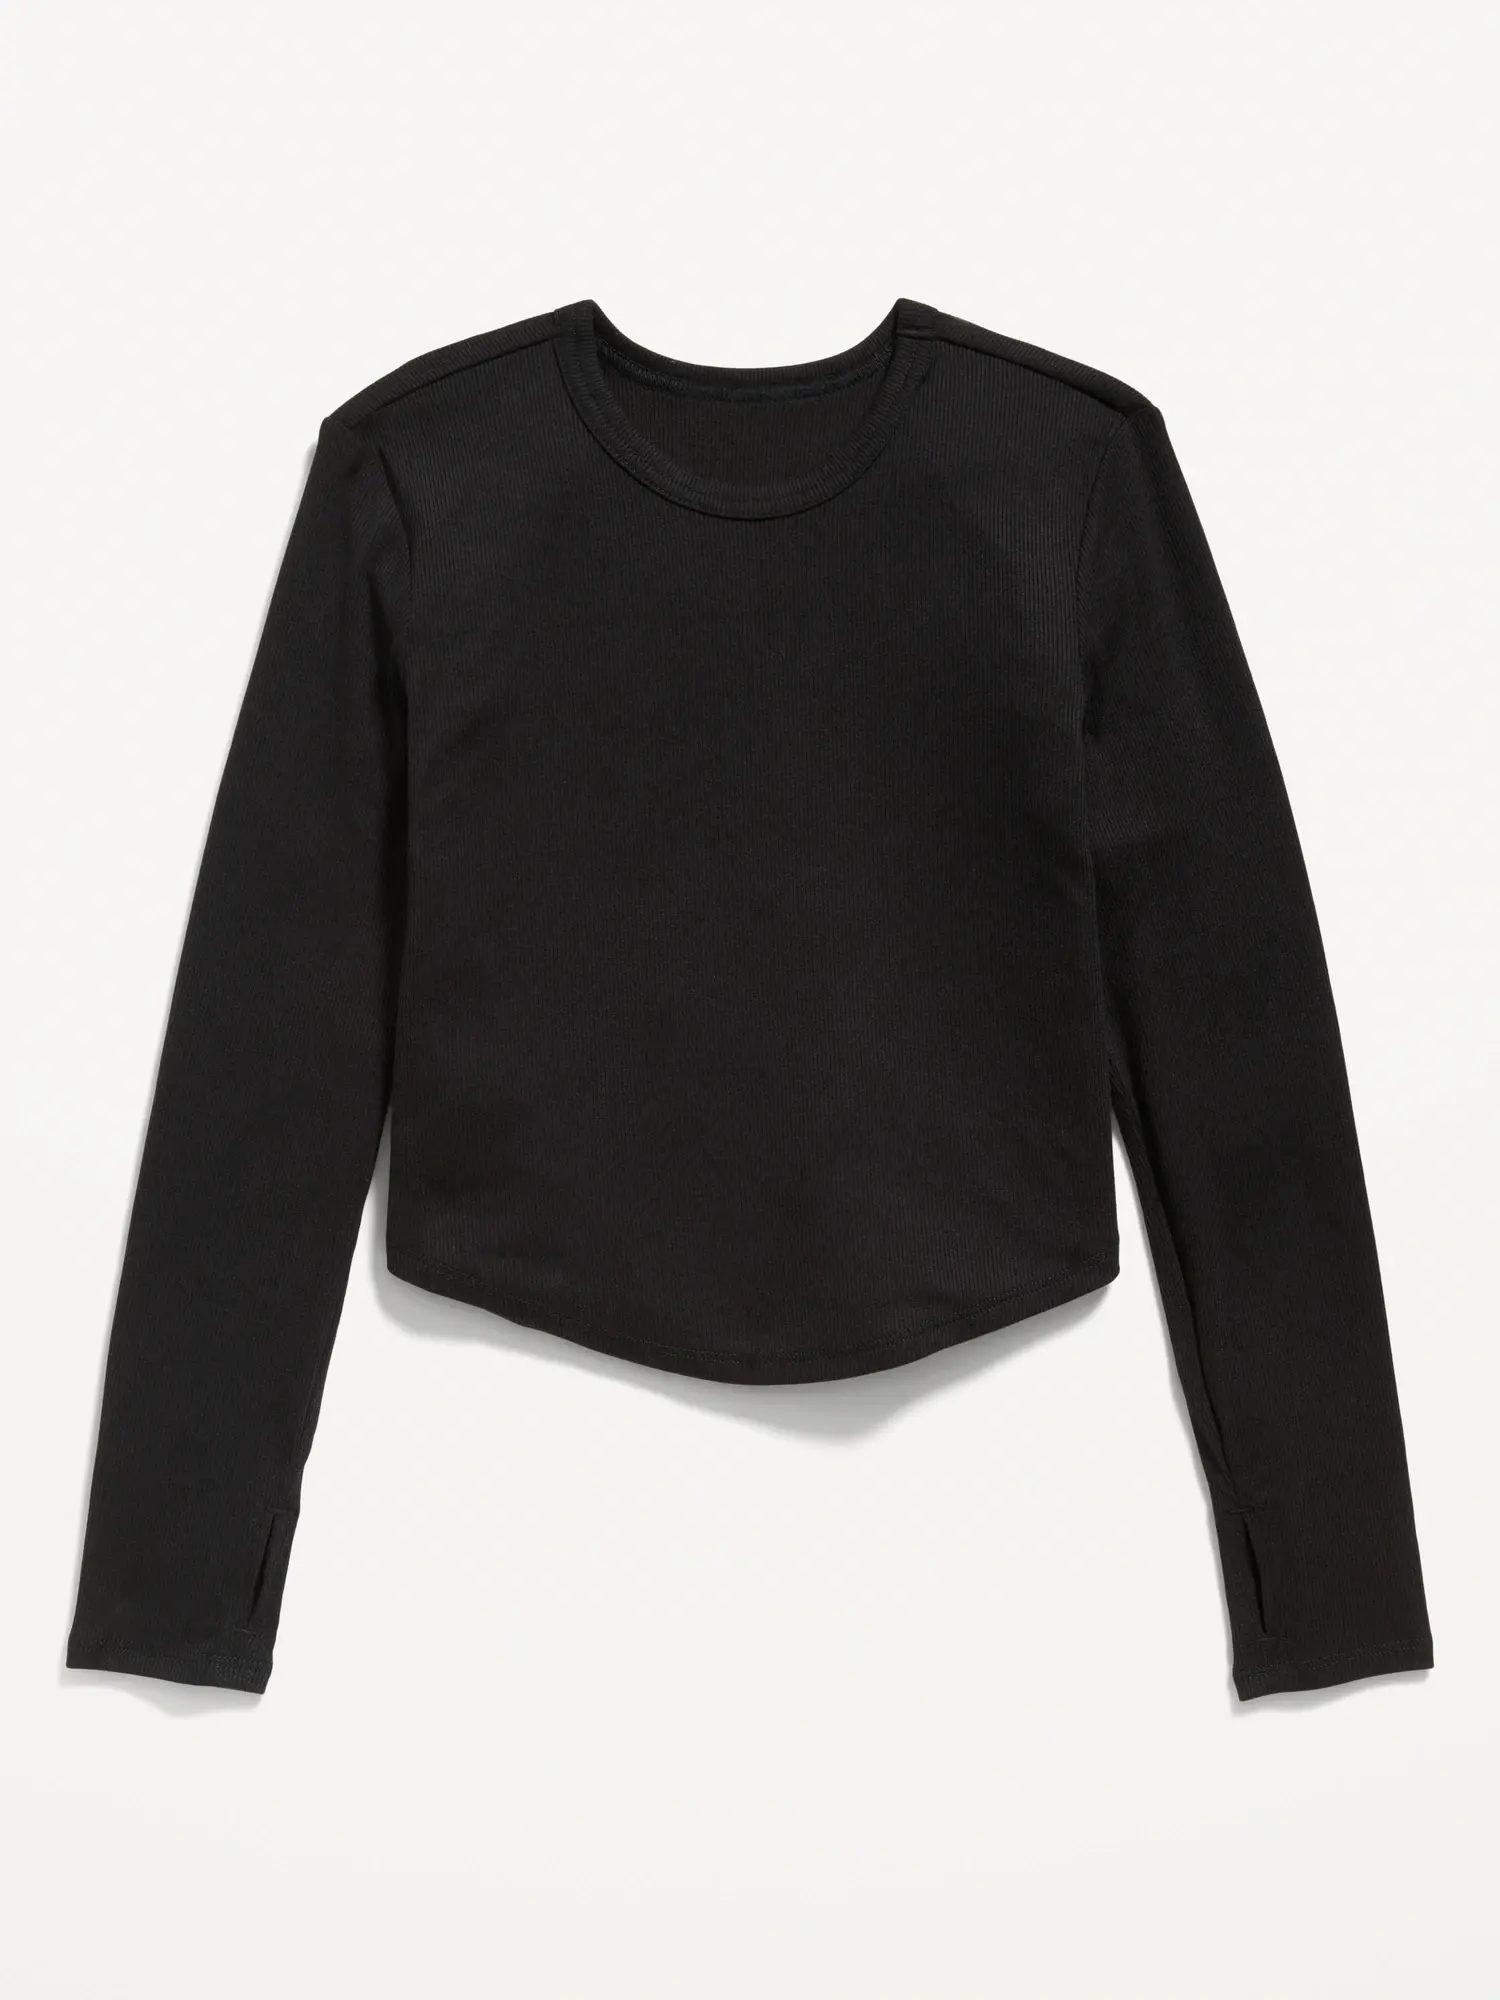 Old Navy UltraLite Long-Sleeve Rib-Knit T-Shirt for Girls black. 1